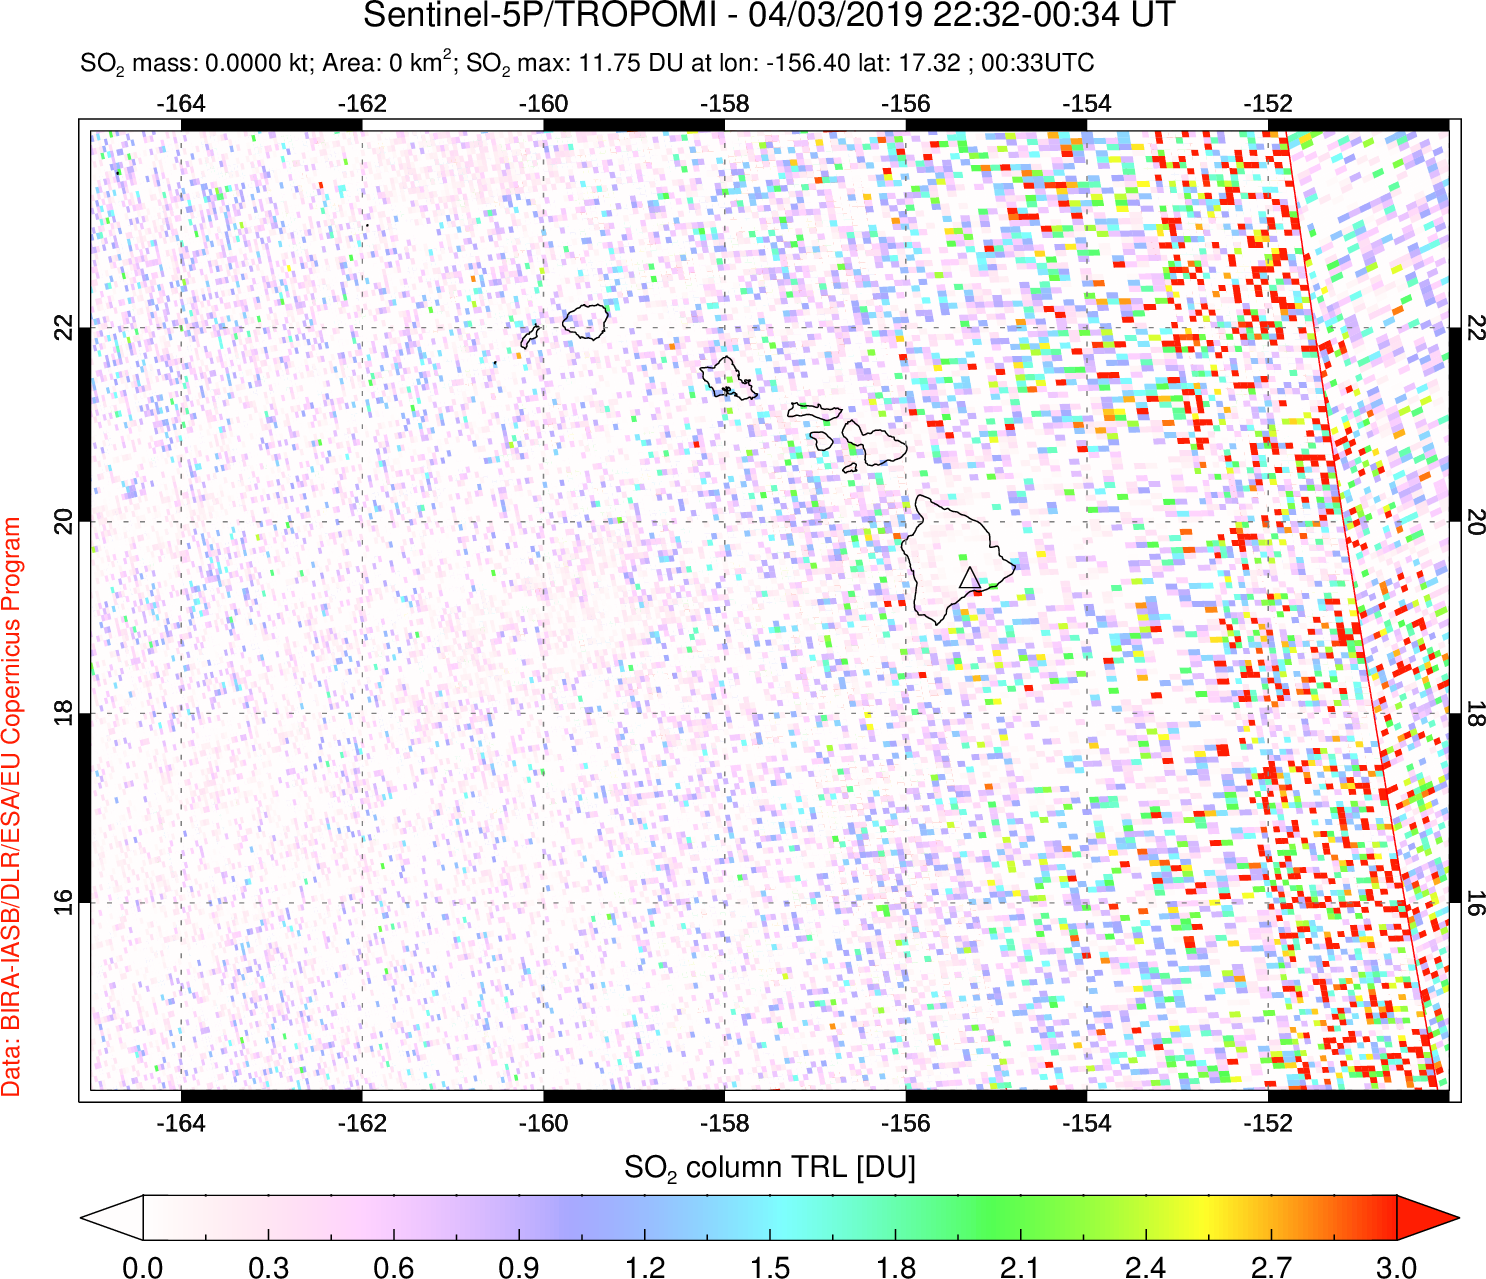 A sulfur dioxide image over Hawaii, USA on Apr 03, 2019.